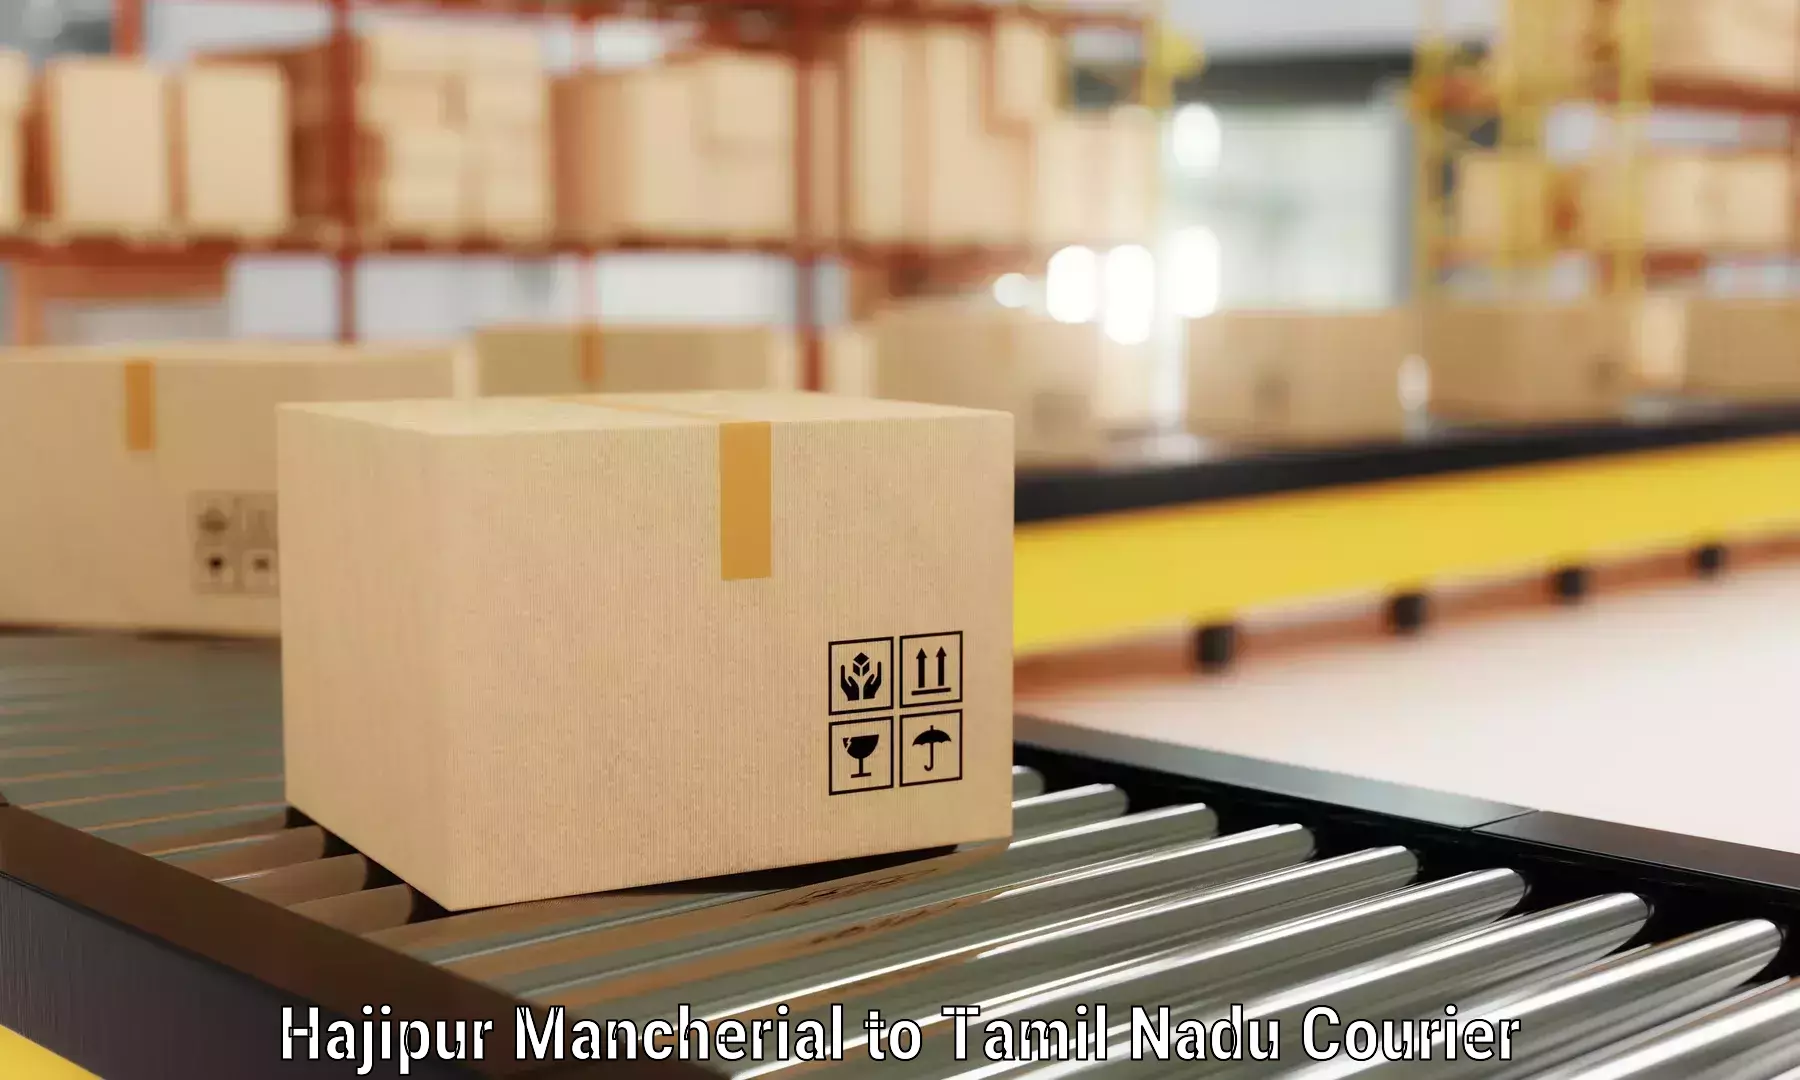 Professional moving company Hajipur Mancherial to Ponnamaravathi